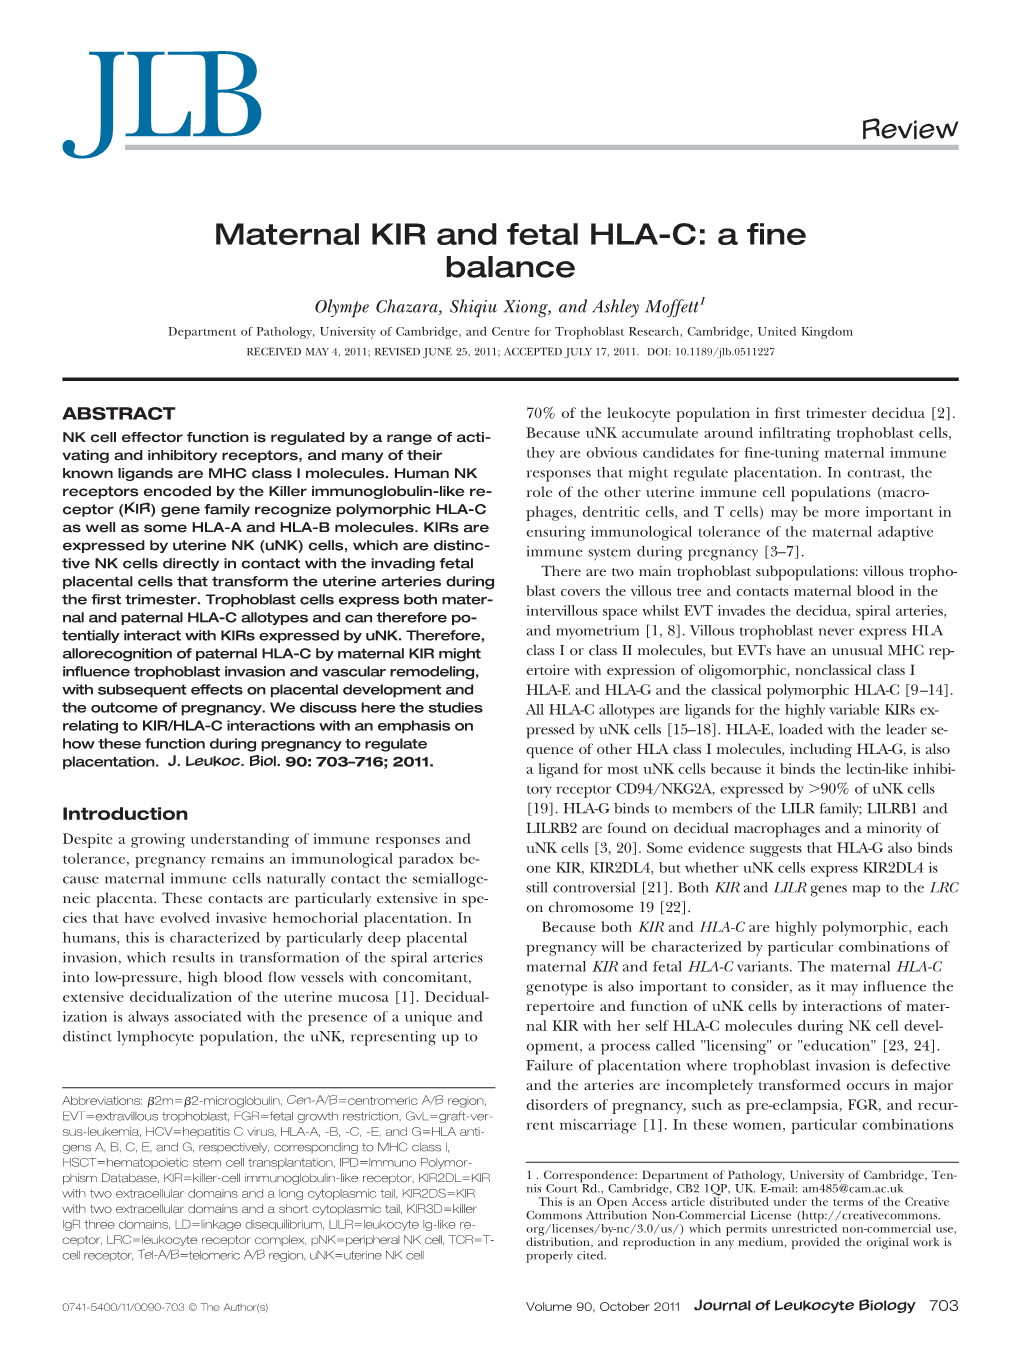 Maternal KIR and Fetal HLA-C: a Fine Balance